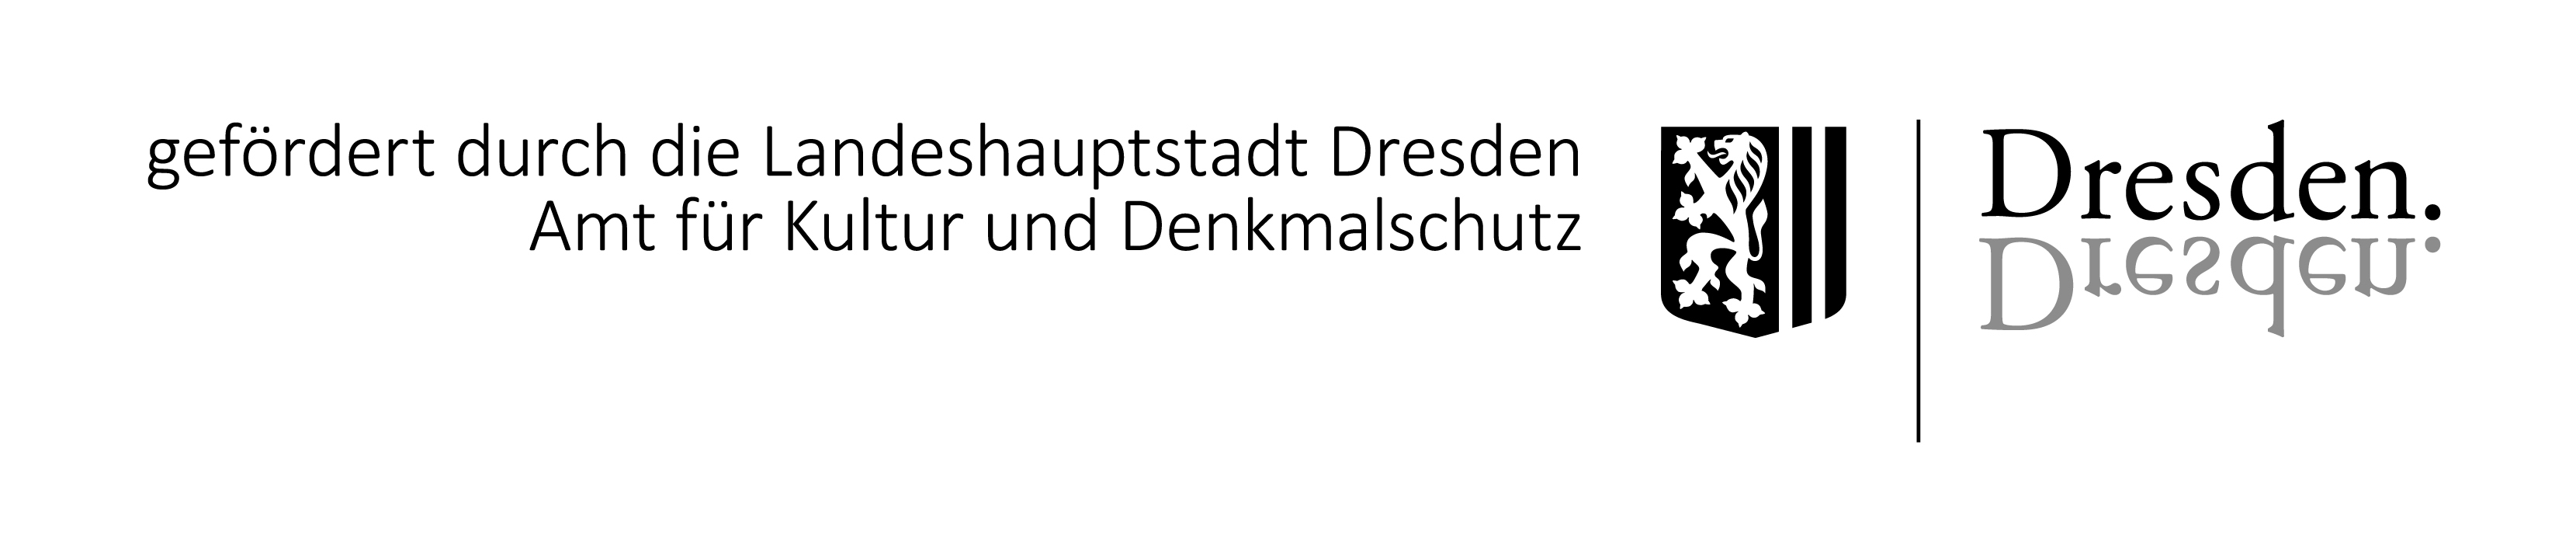 Dresden-Logo-2014-SW-Sponsoring_A41